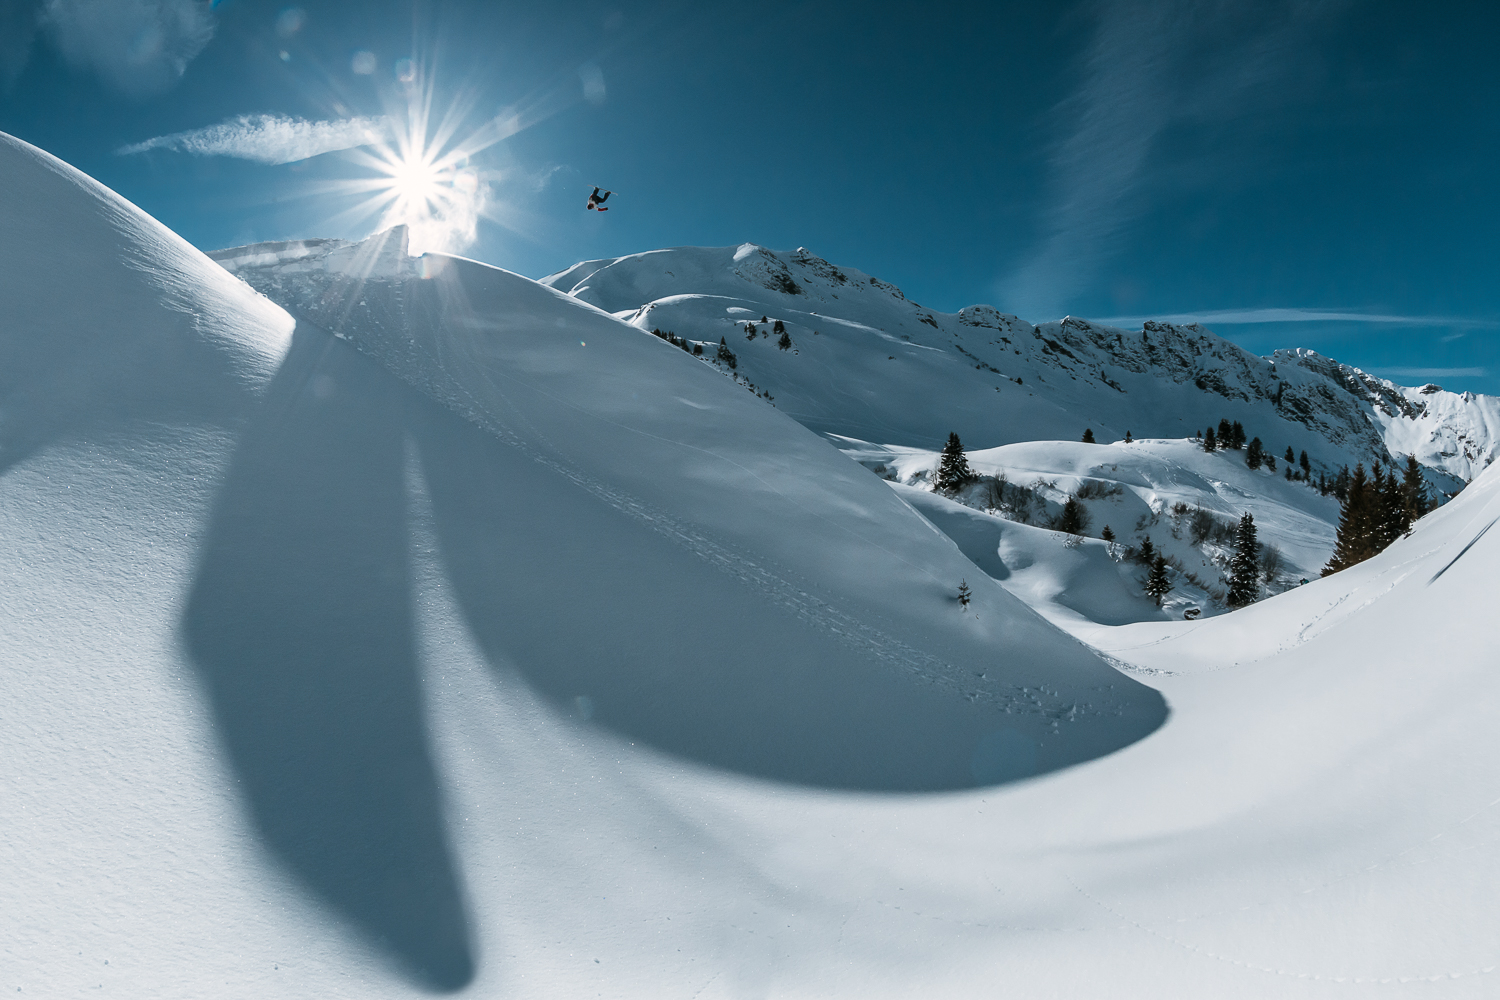 Francois+Marclay_snowboarding_86.jpg